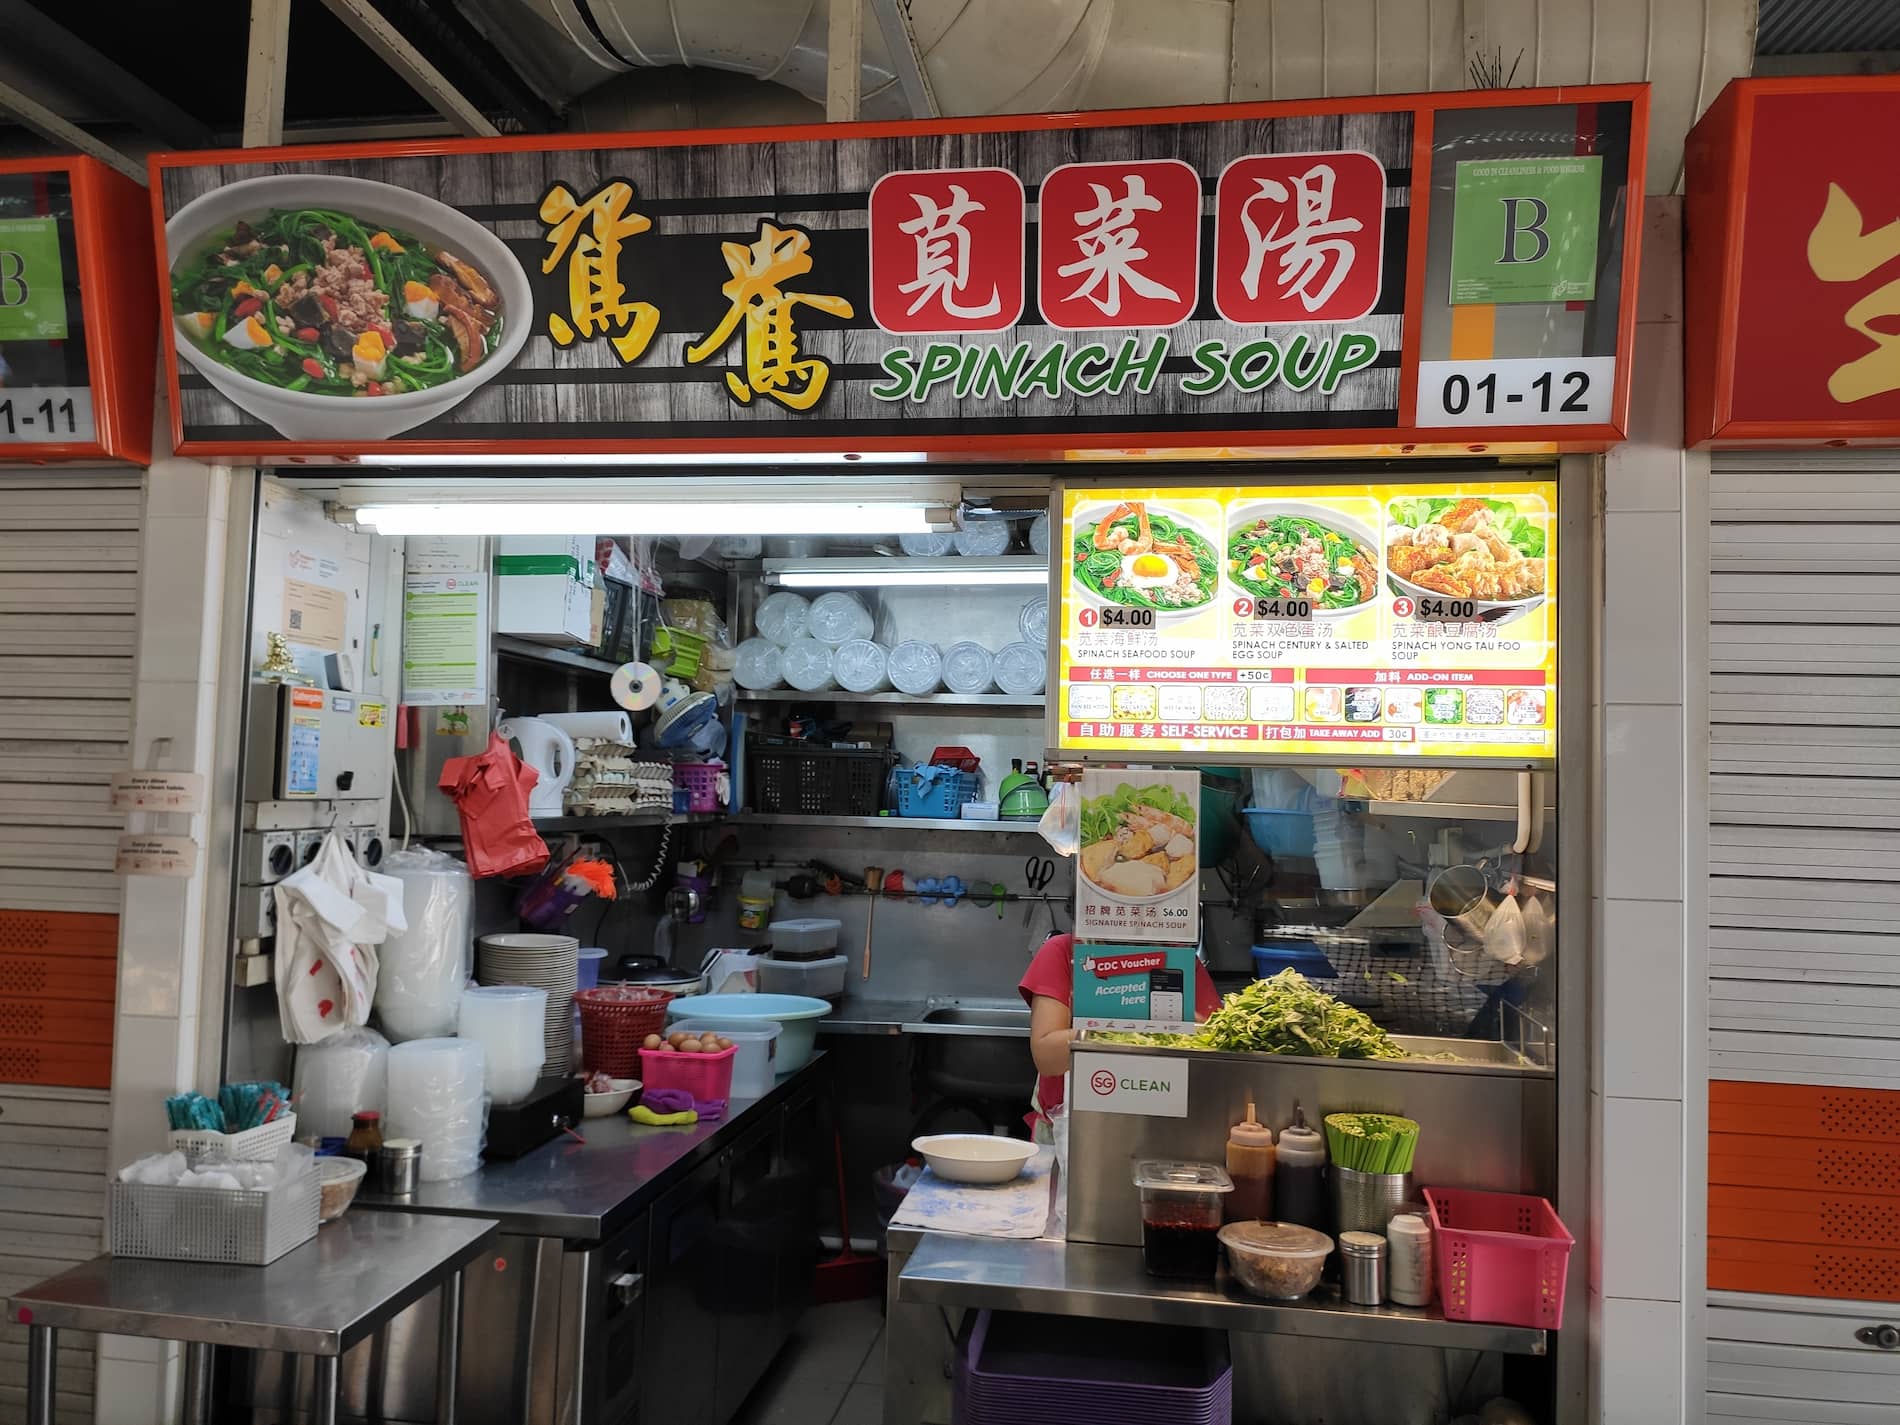 yuan-yang-spinach-soup-storefront